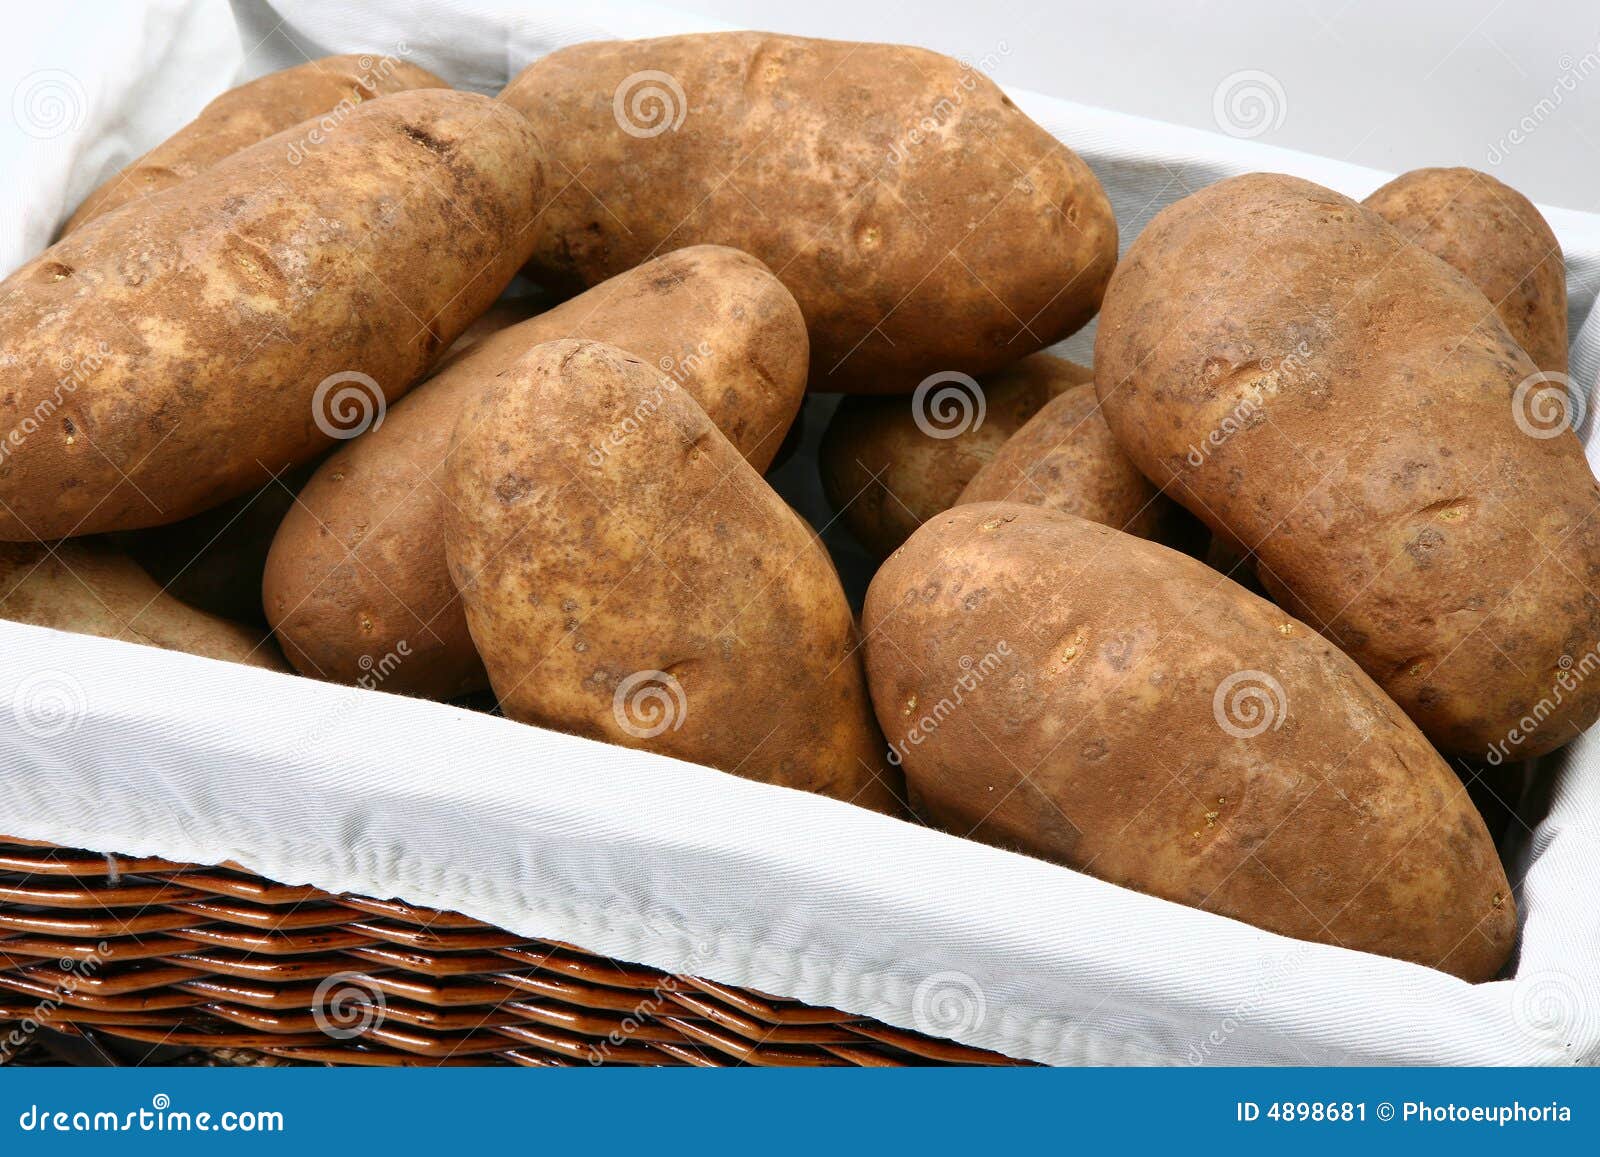 jumbo russet potatoes in basket